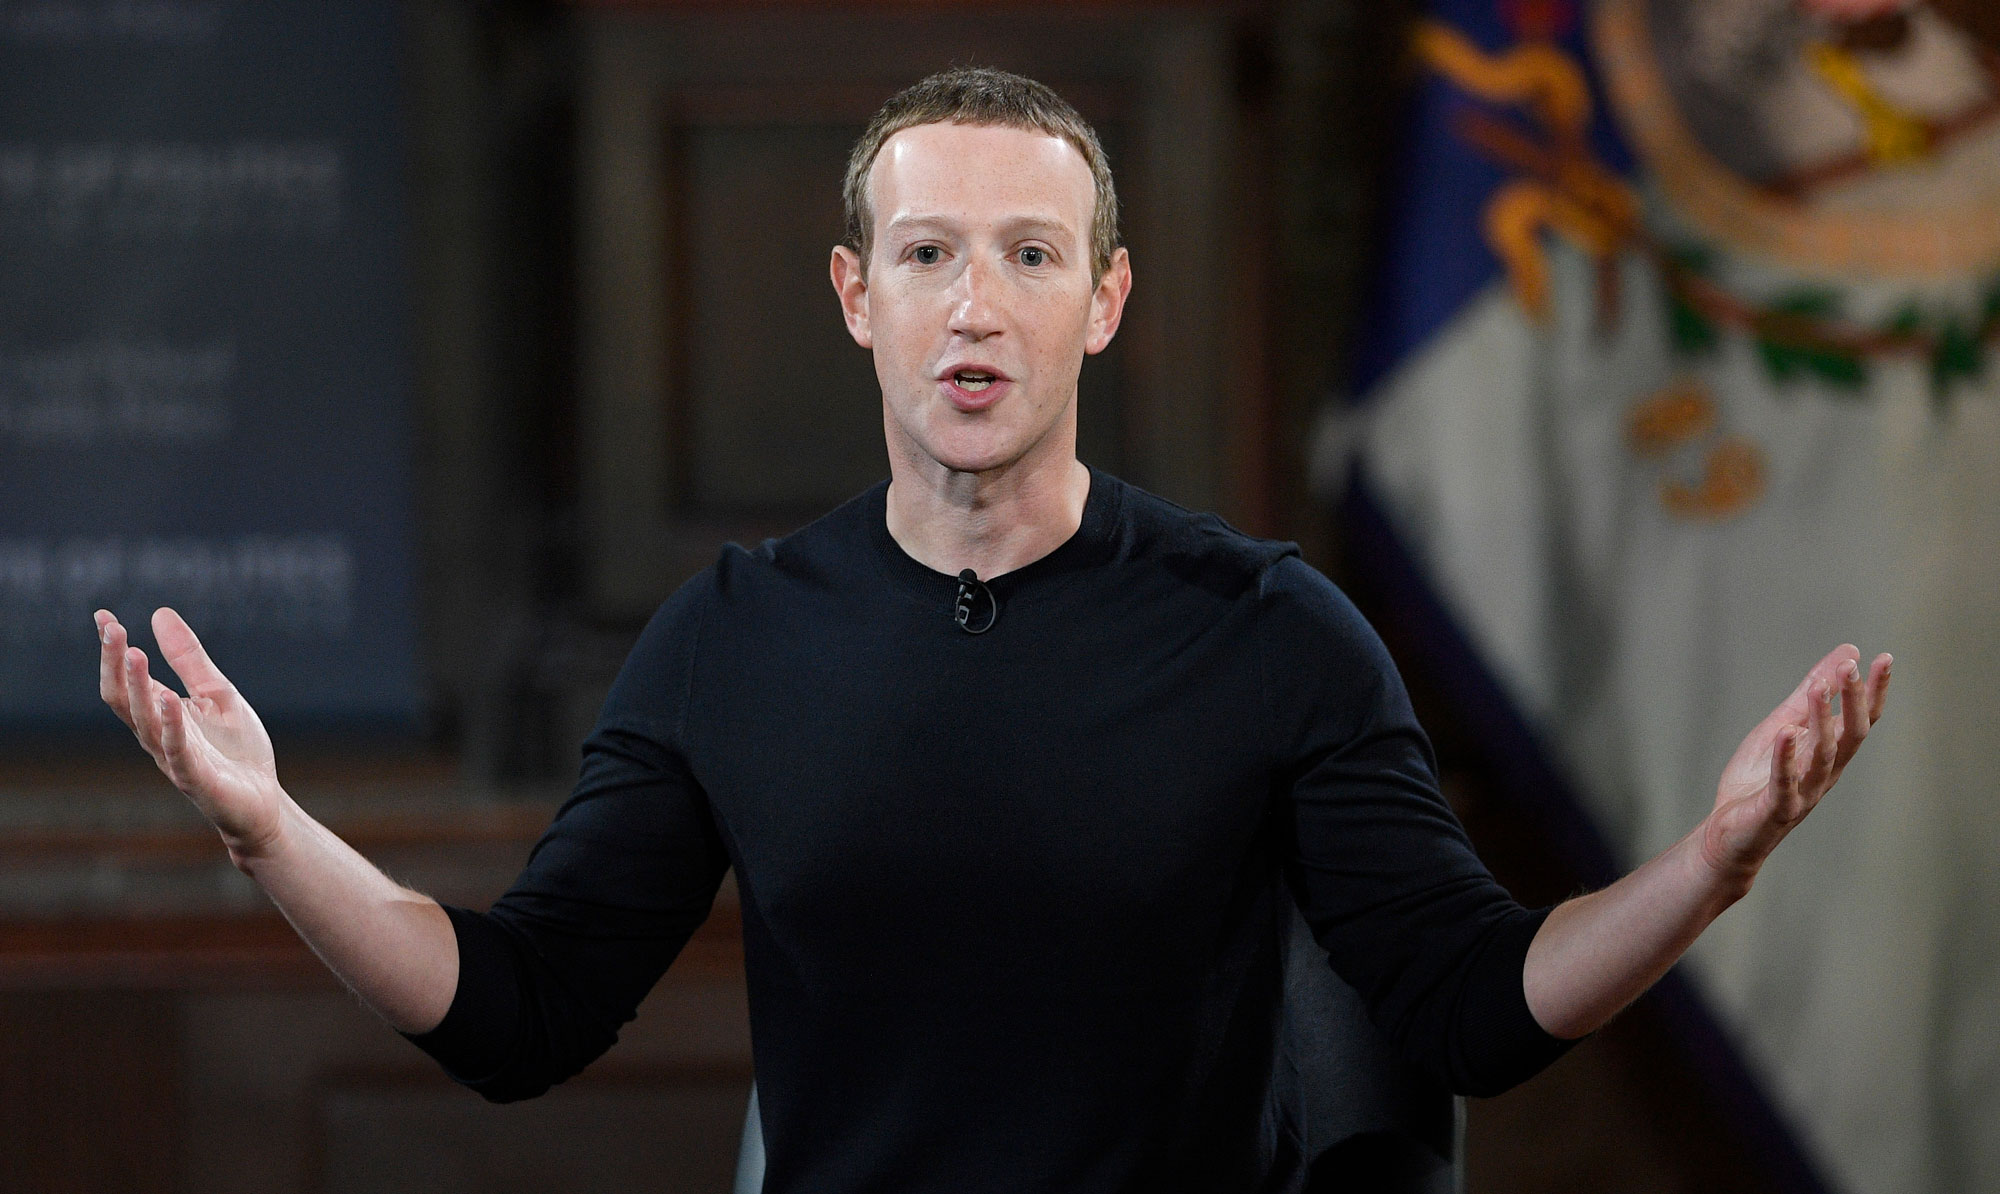 Facebook CEO Mark Zuckerberg delivering a speech